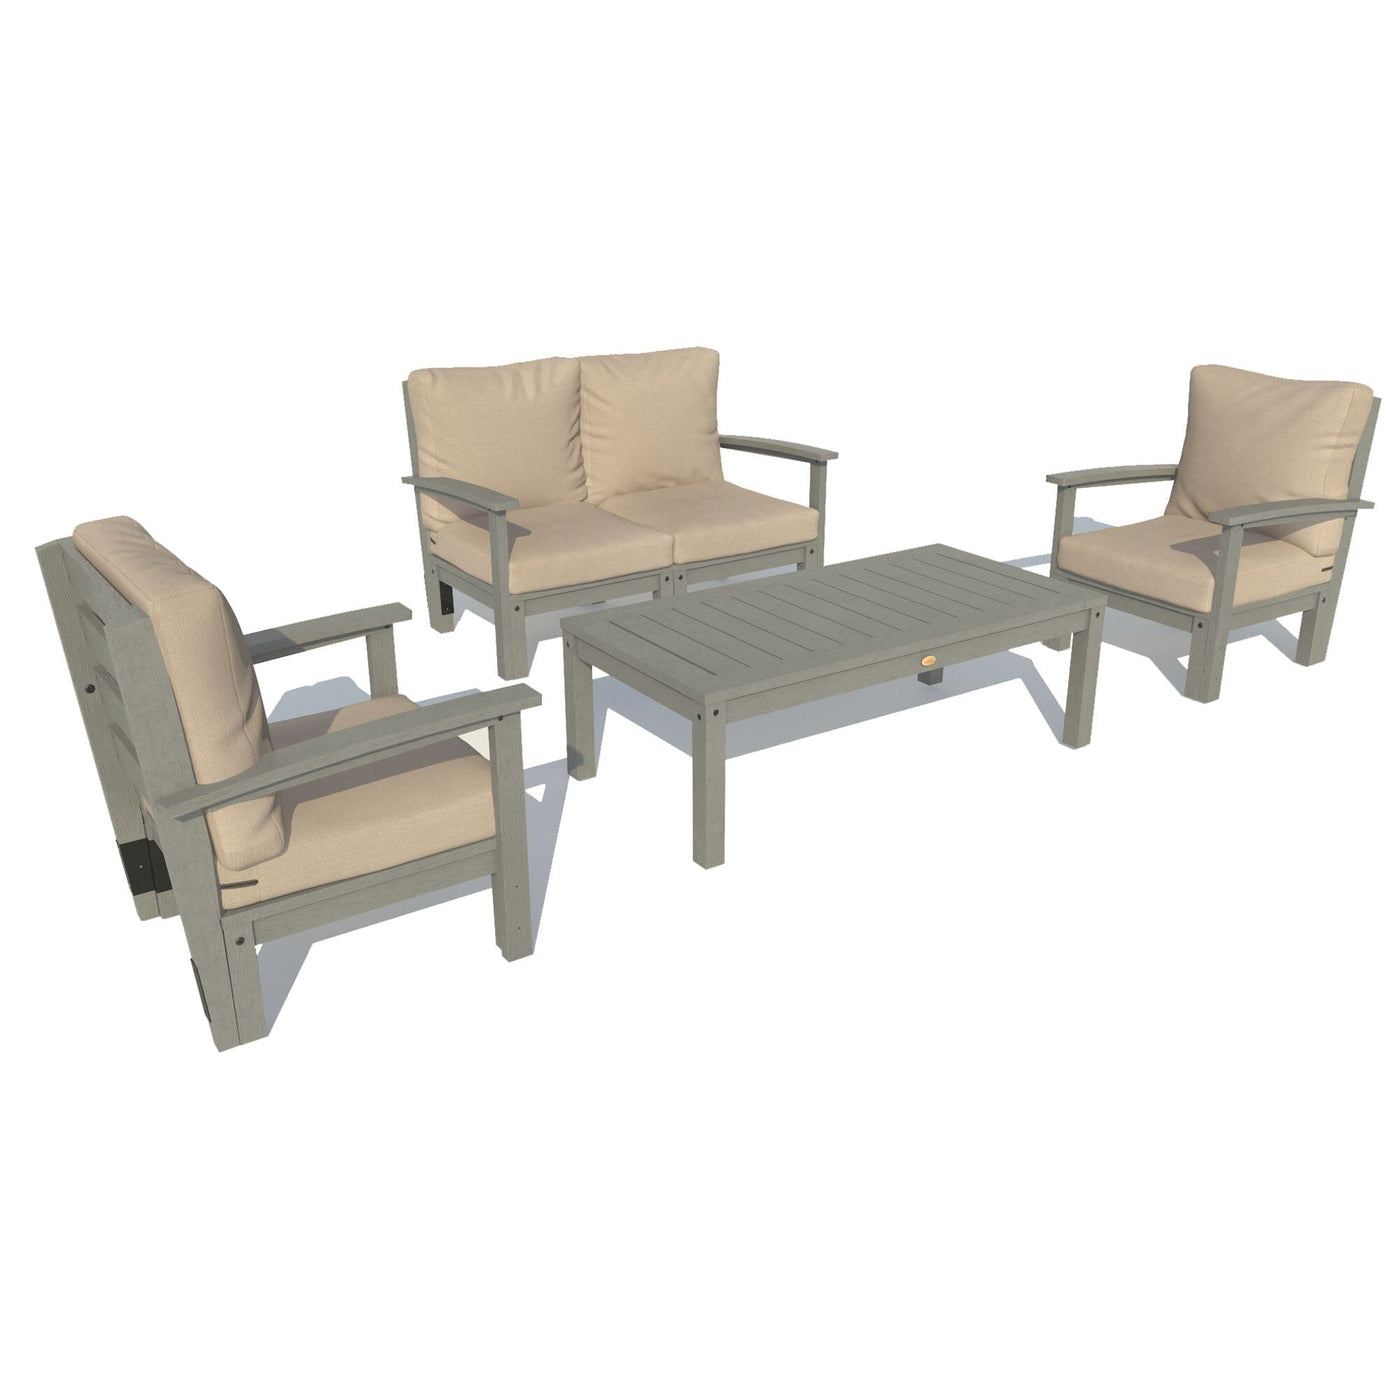 Bespoke Deep Seating: Loveseat, 2 Chair Set, and Conversation Table Deep Seating Highwood USA Driftwood Coastal Teak 